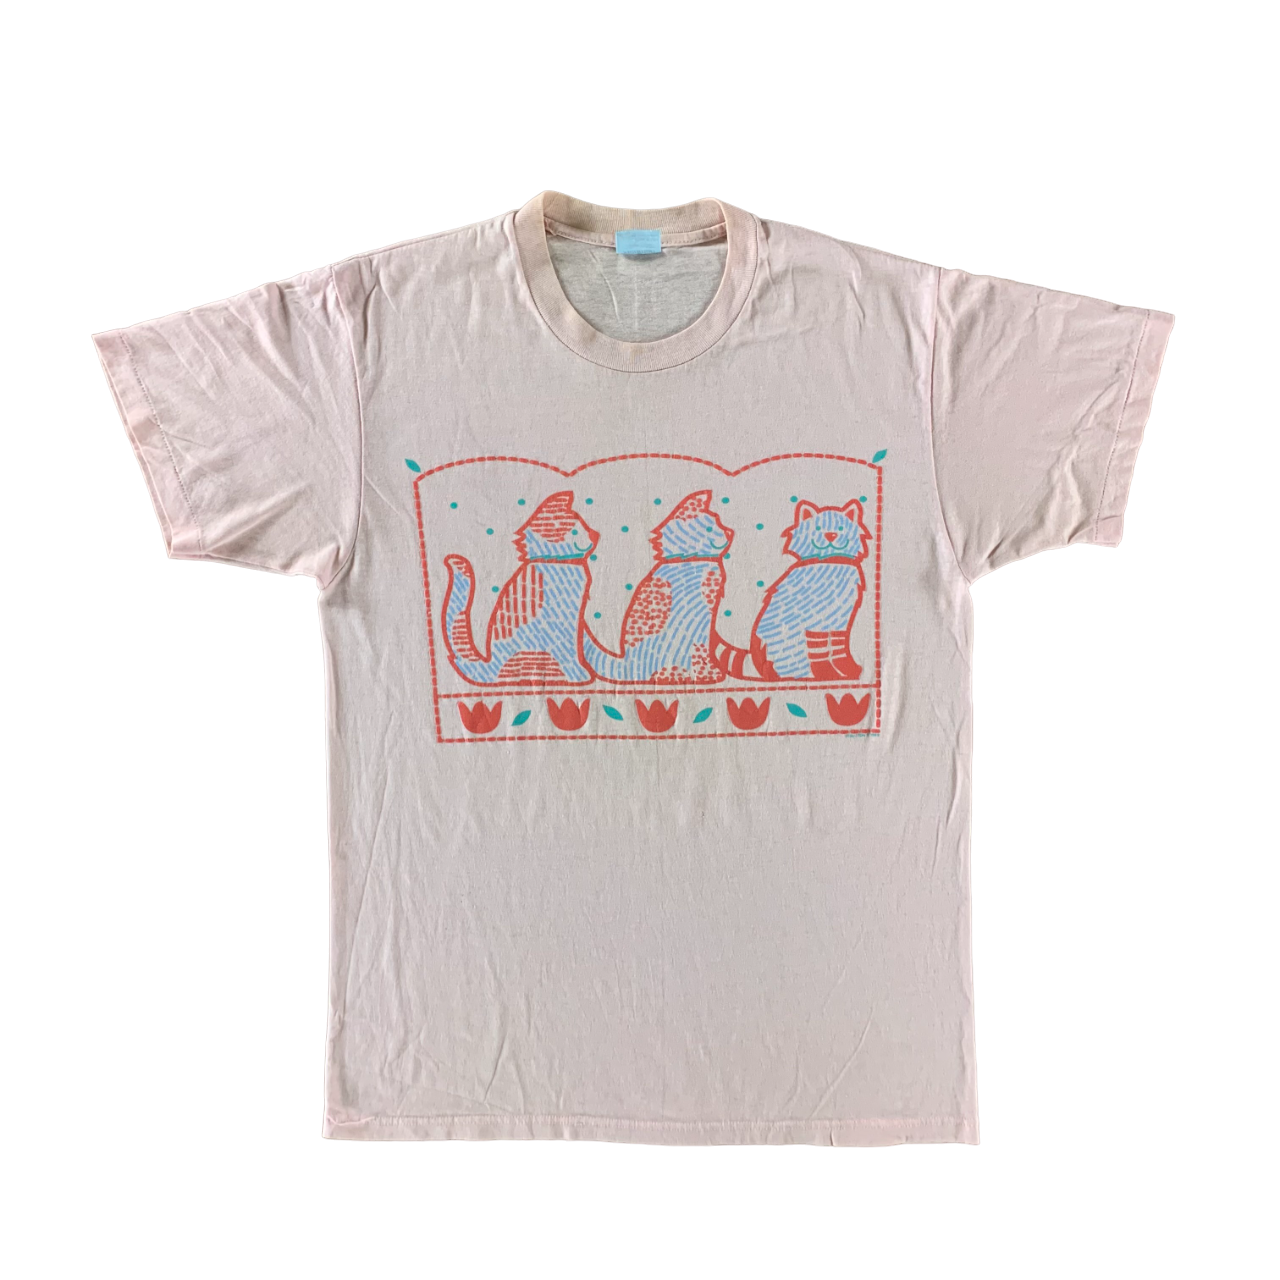 Vintage 1989 Cats T-shirt size XL